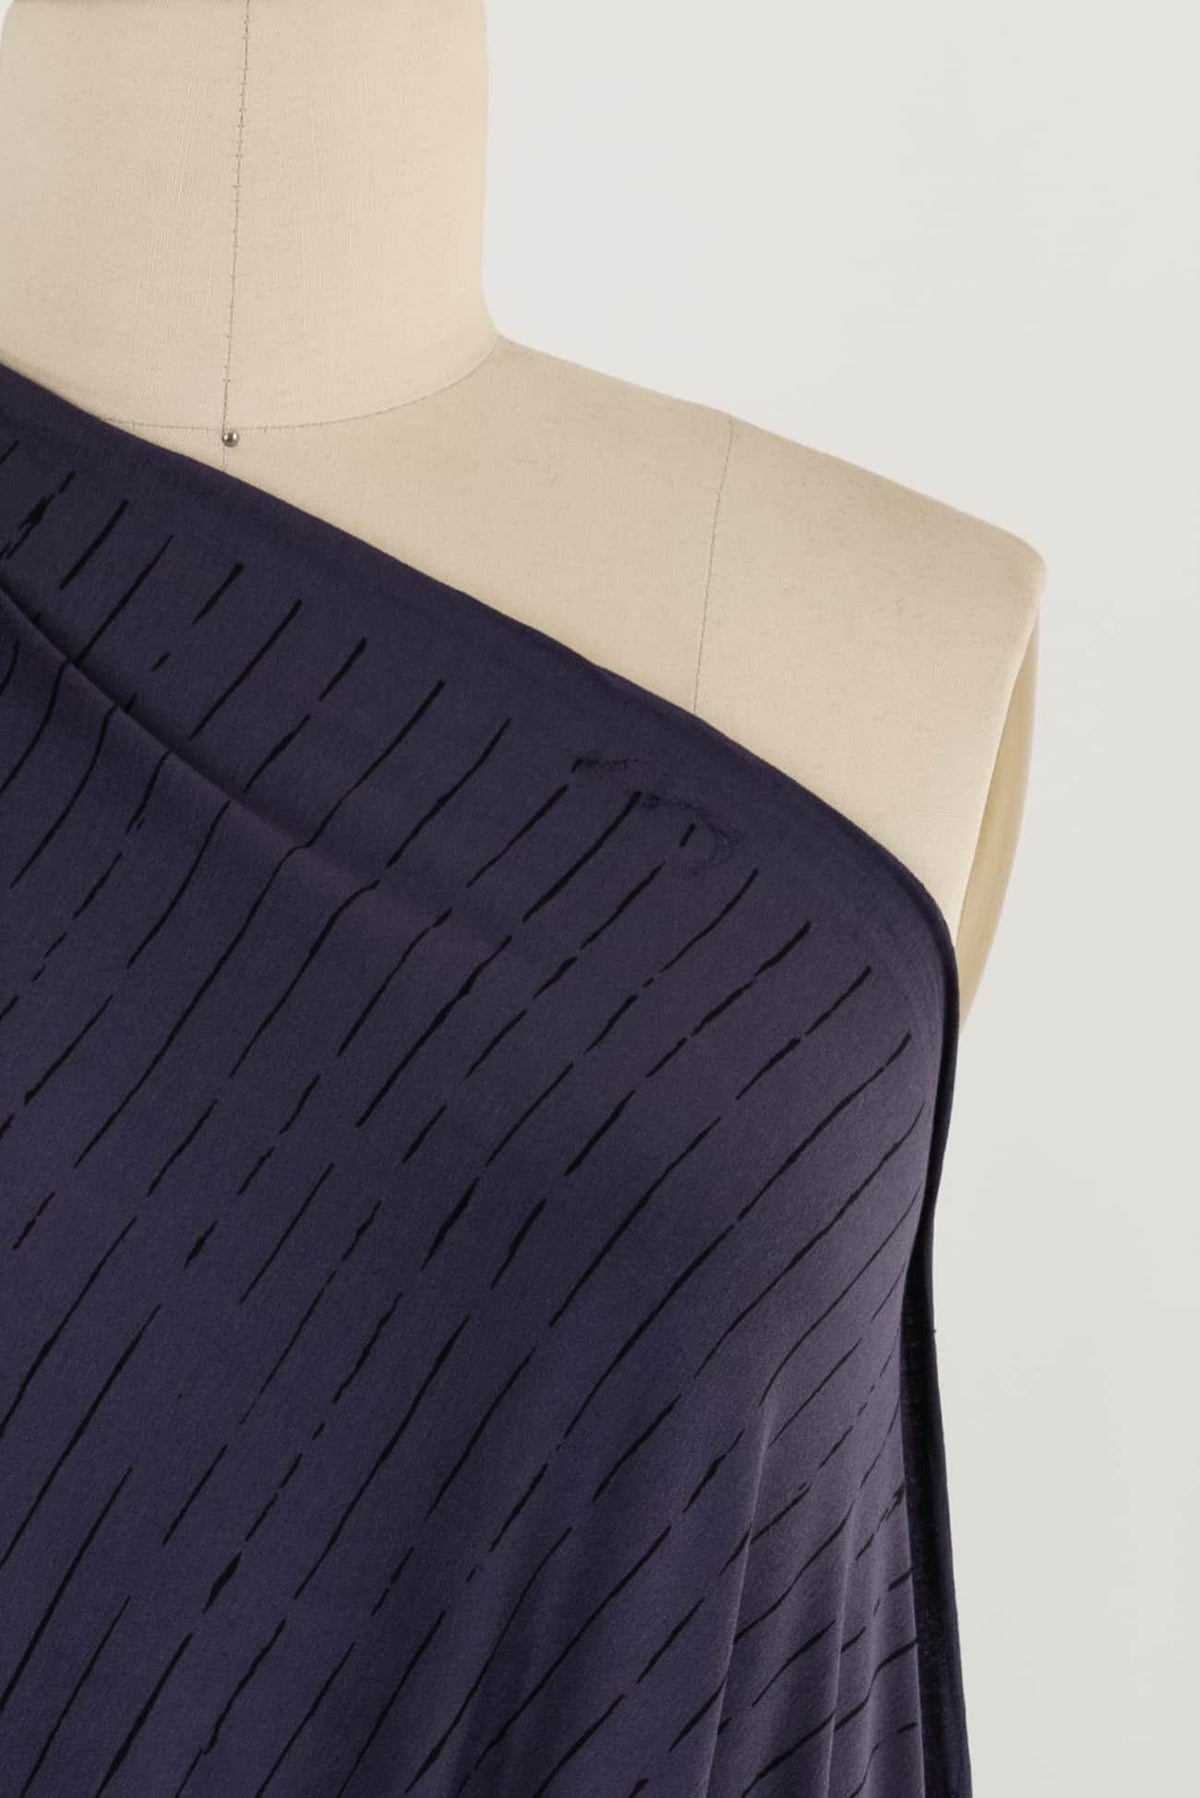 Aubergine Broken Stripes USA Knit - Marcy Tilton Fabrics